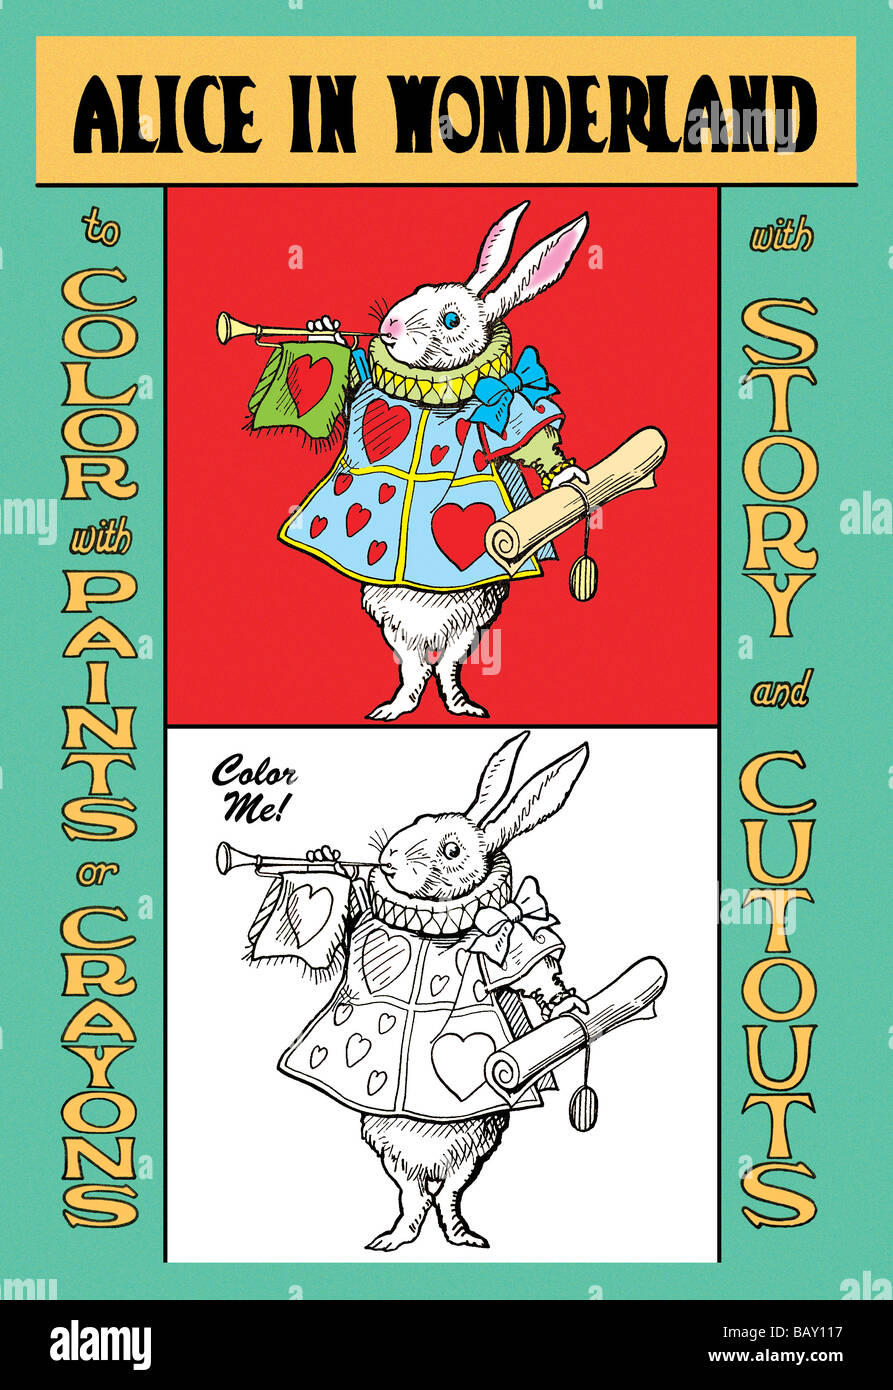 Alice in Wonderland: The White Rabbit - Color Me! Stock Photo